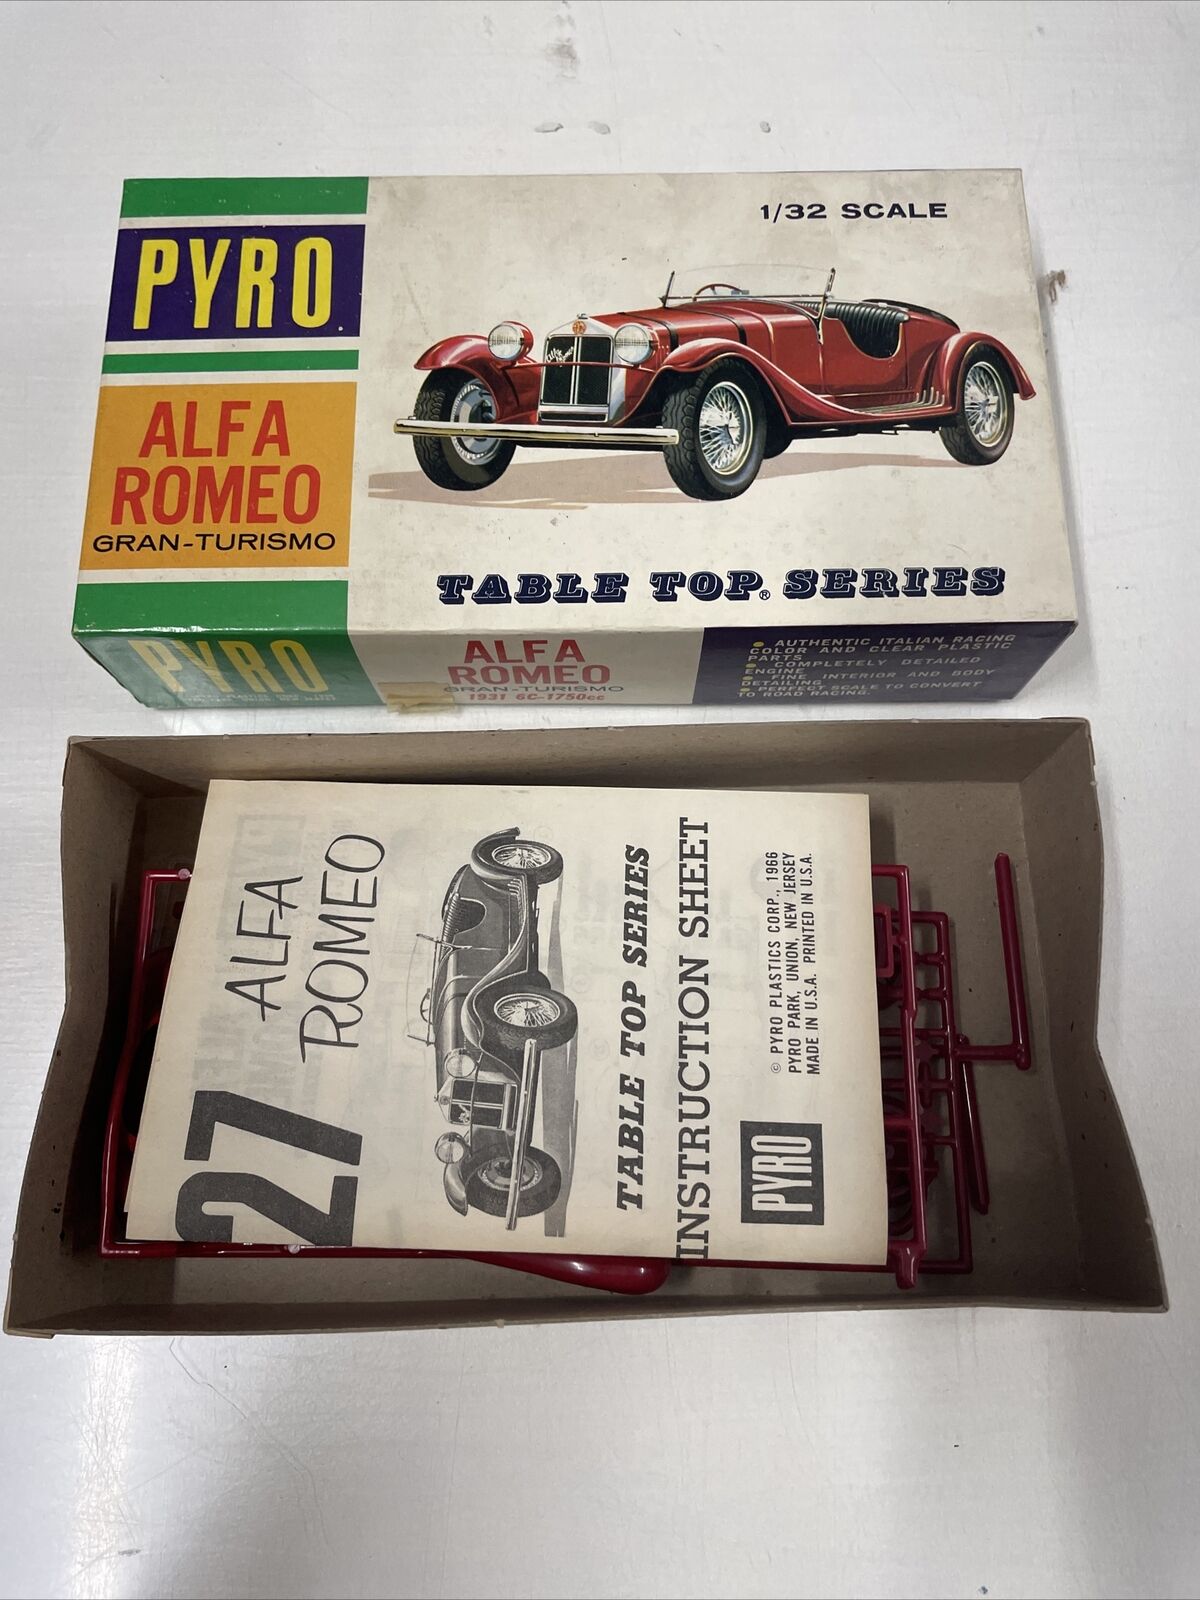 PYRO-Alfa-Romeo-Gran-turismo-Model-Kit-144779082628-4